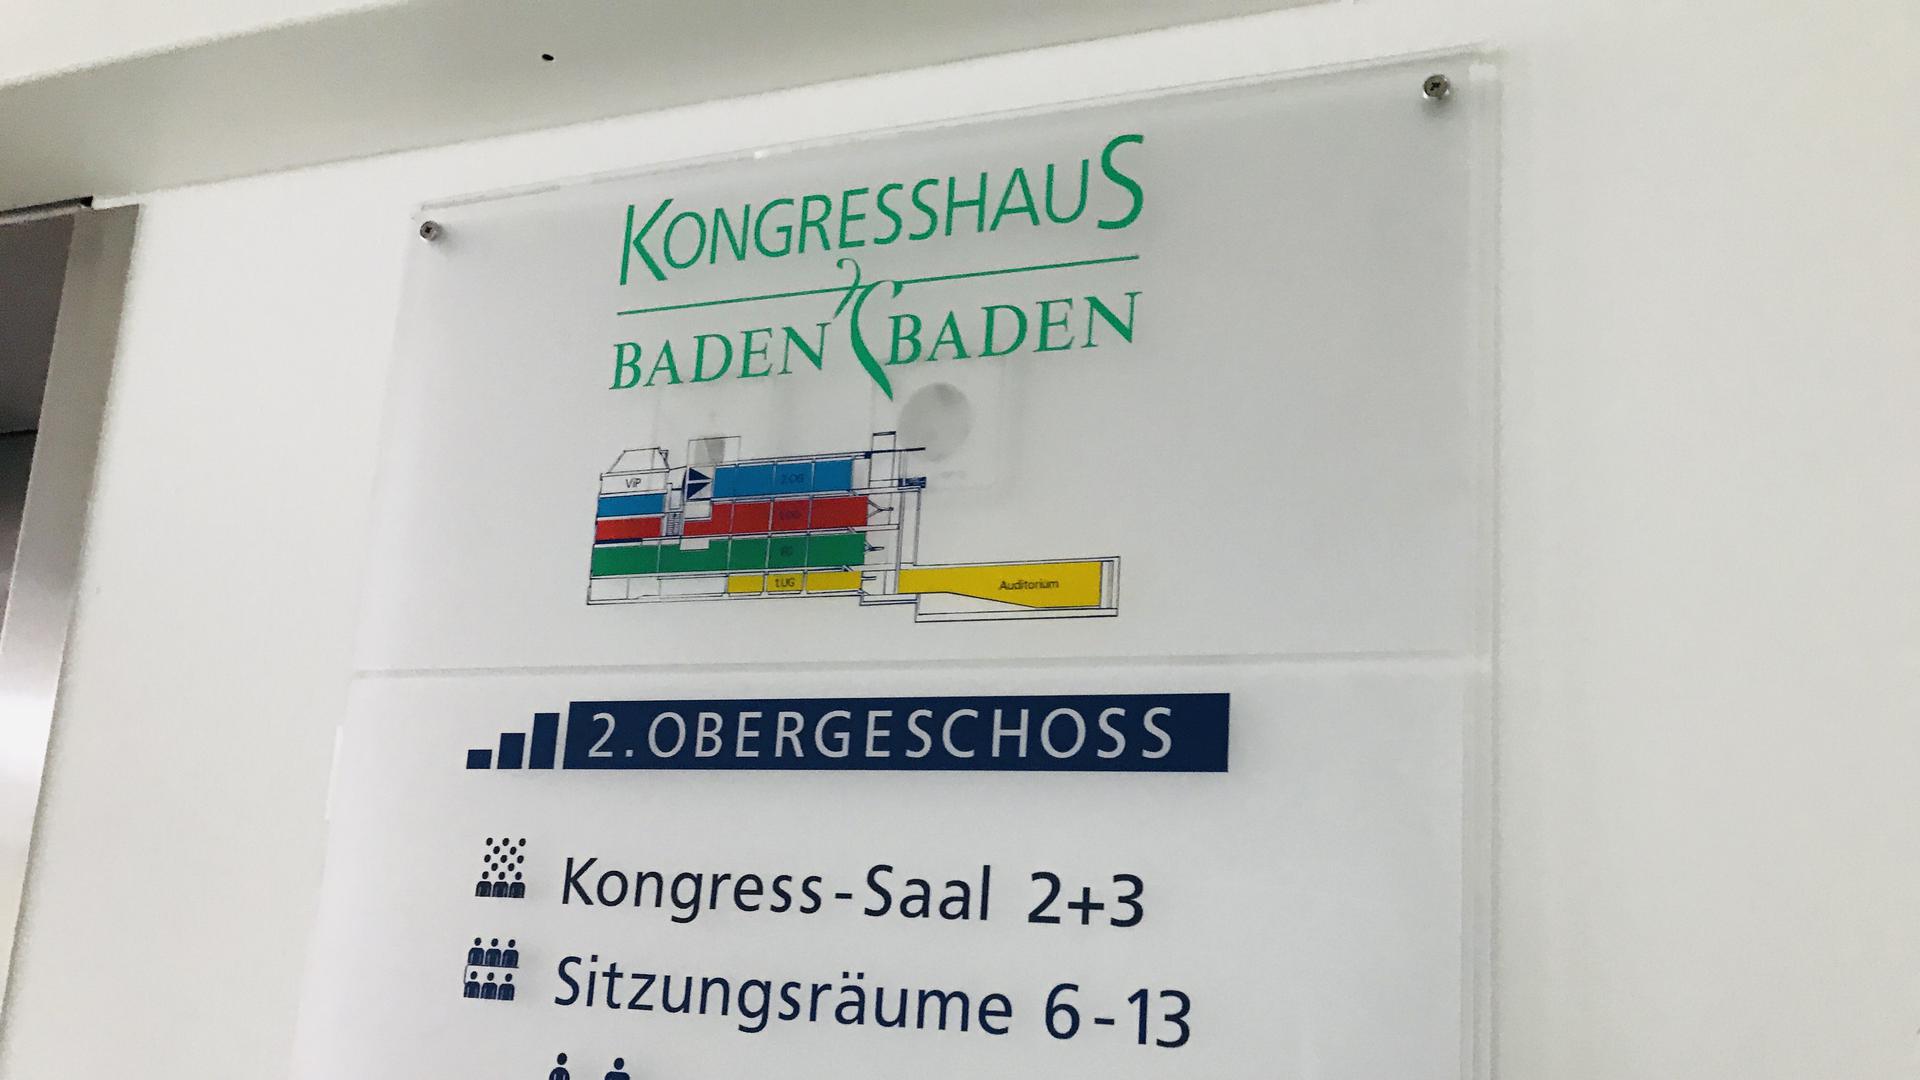 Kongresshaus Baden-Baden